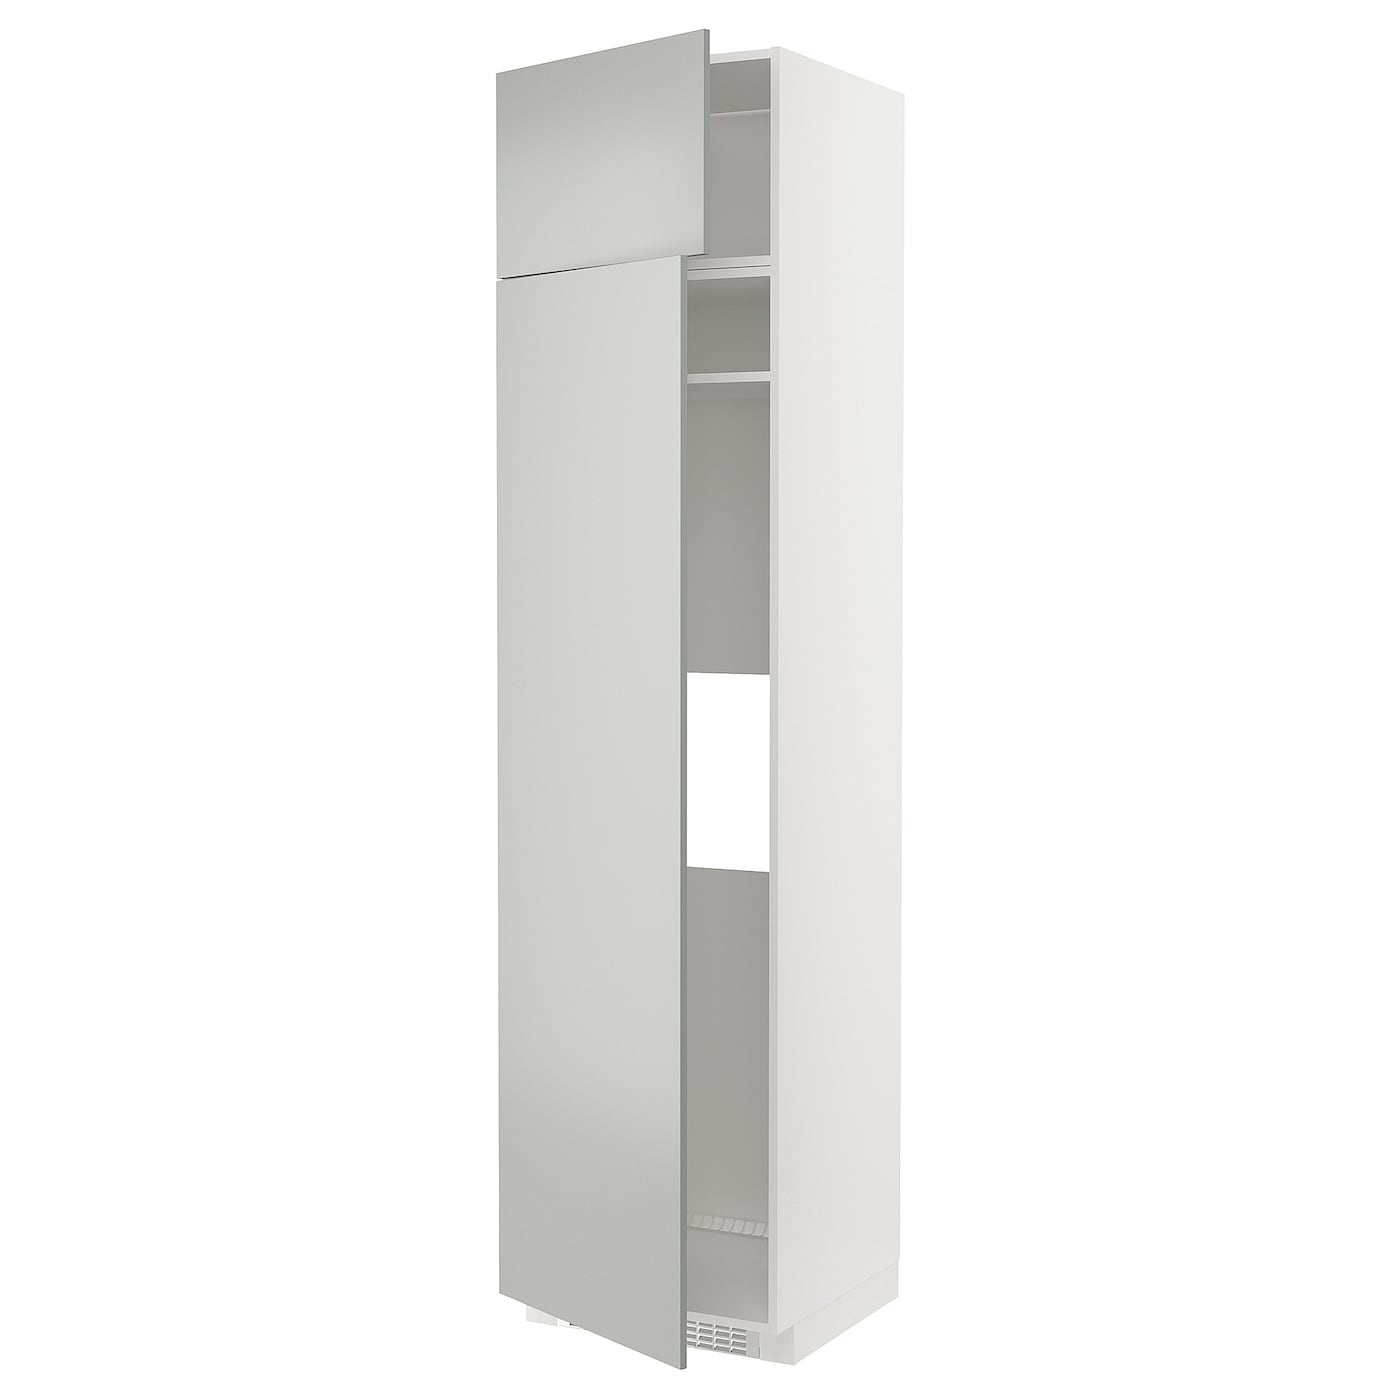 Высокий кухонный шкаф - IKEA METOD/МЕТОД ИКЕА, 240х60х60 см, белый/серый